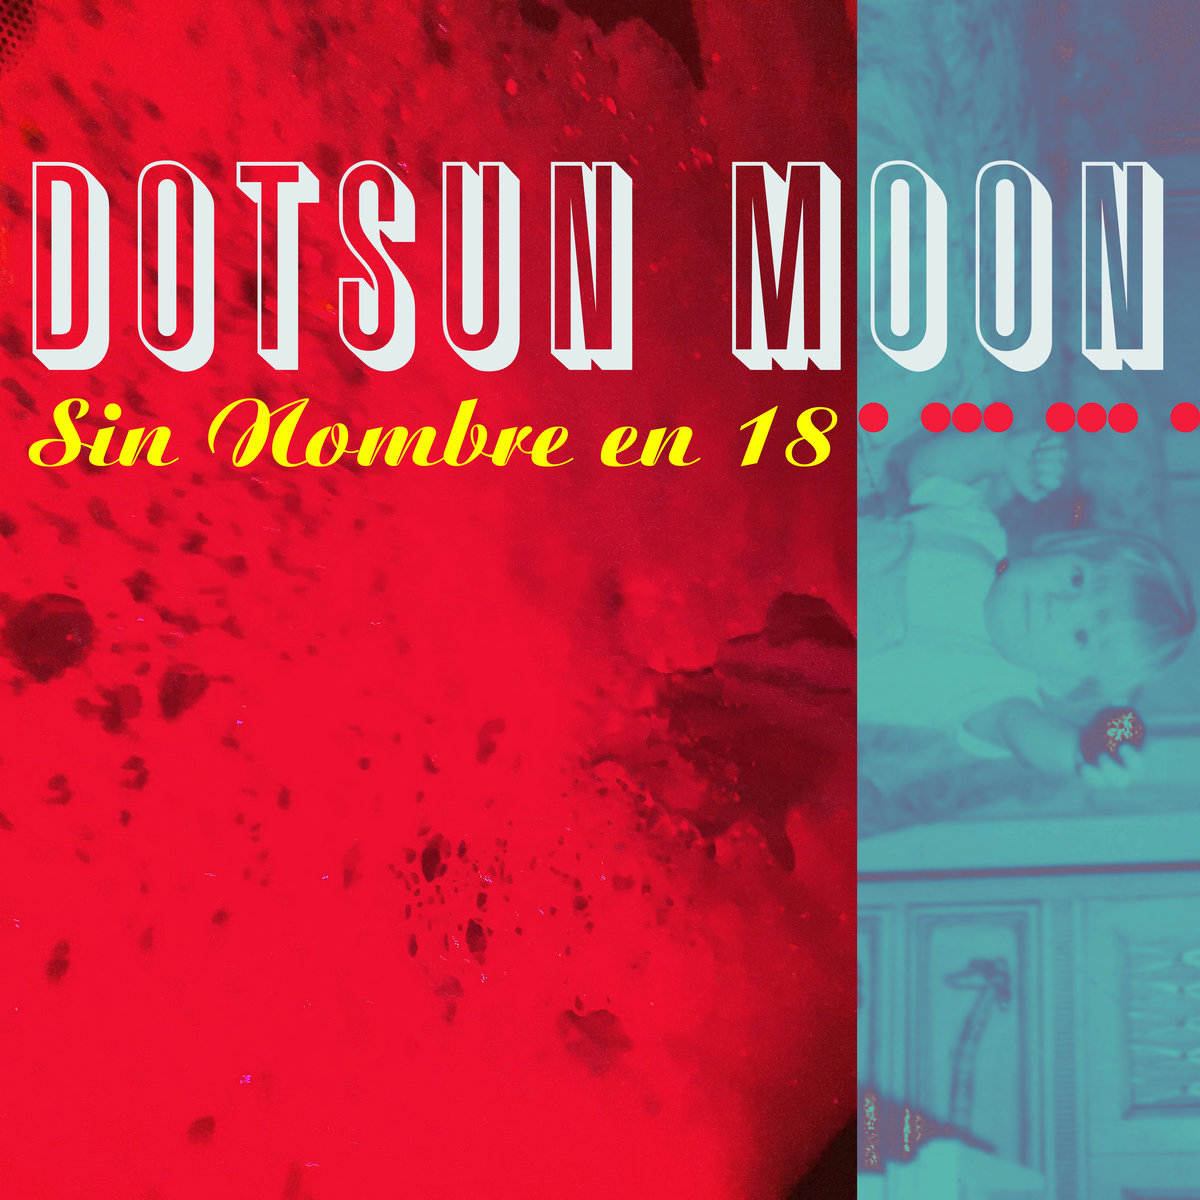 Dotsun Moon Drop New Single “Sin Nombre en 18”